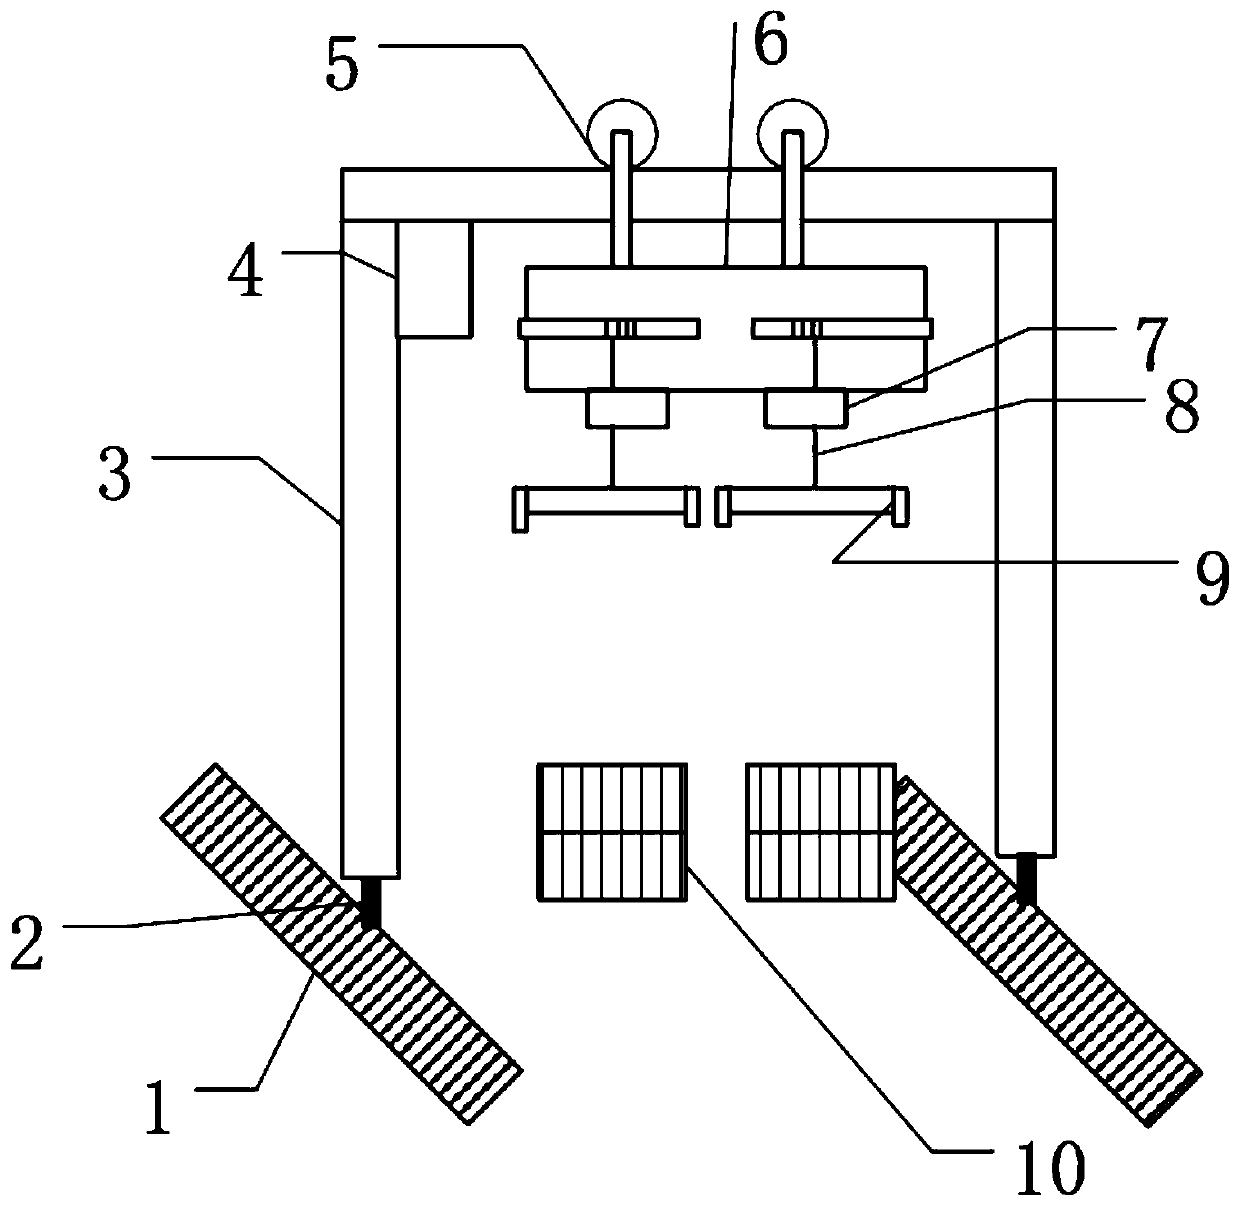 Detection mechanism and measurement method of swing angle of double spreader bridge crane based on photosensitive element